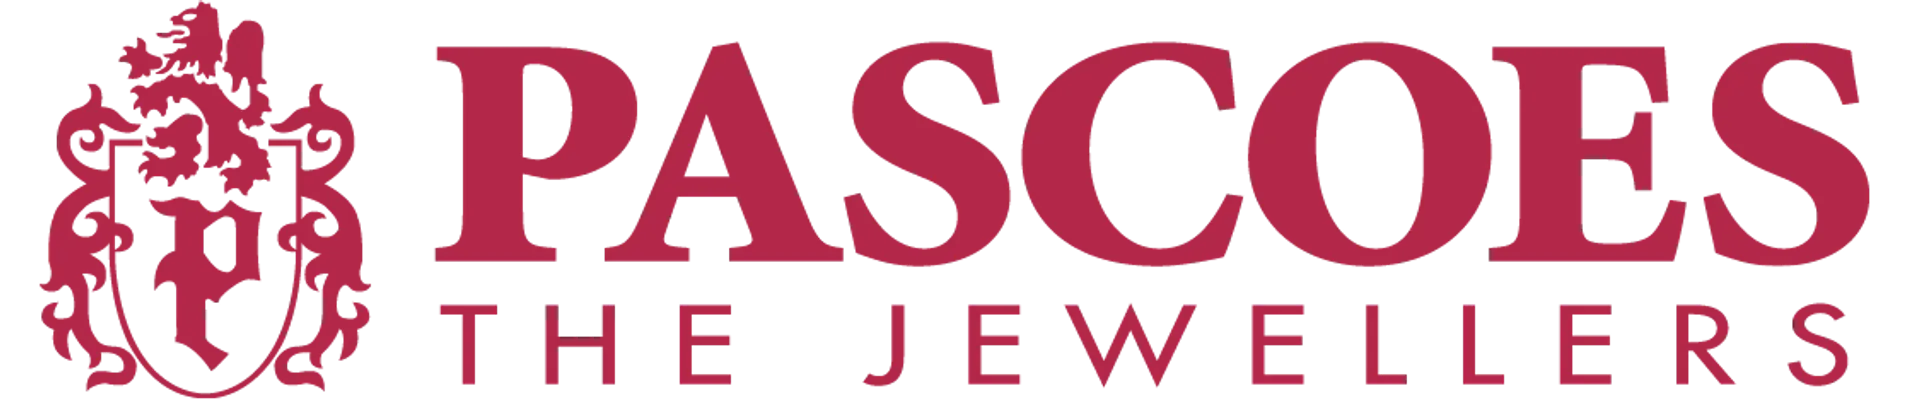 PASCOES logo